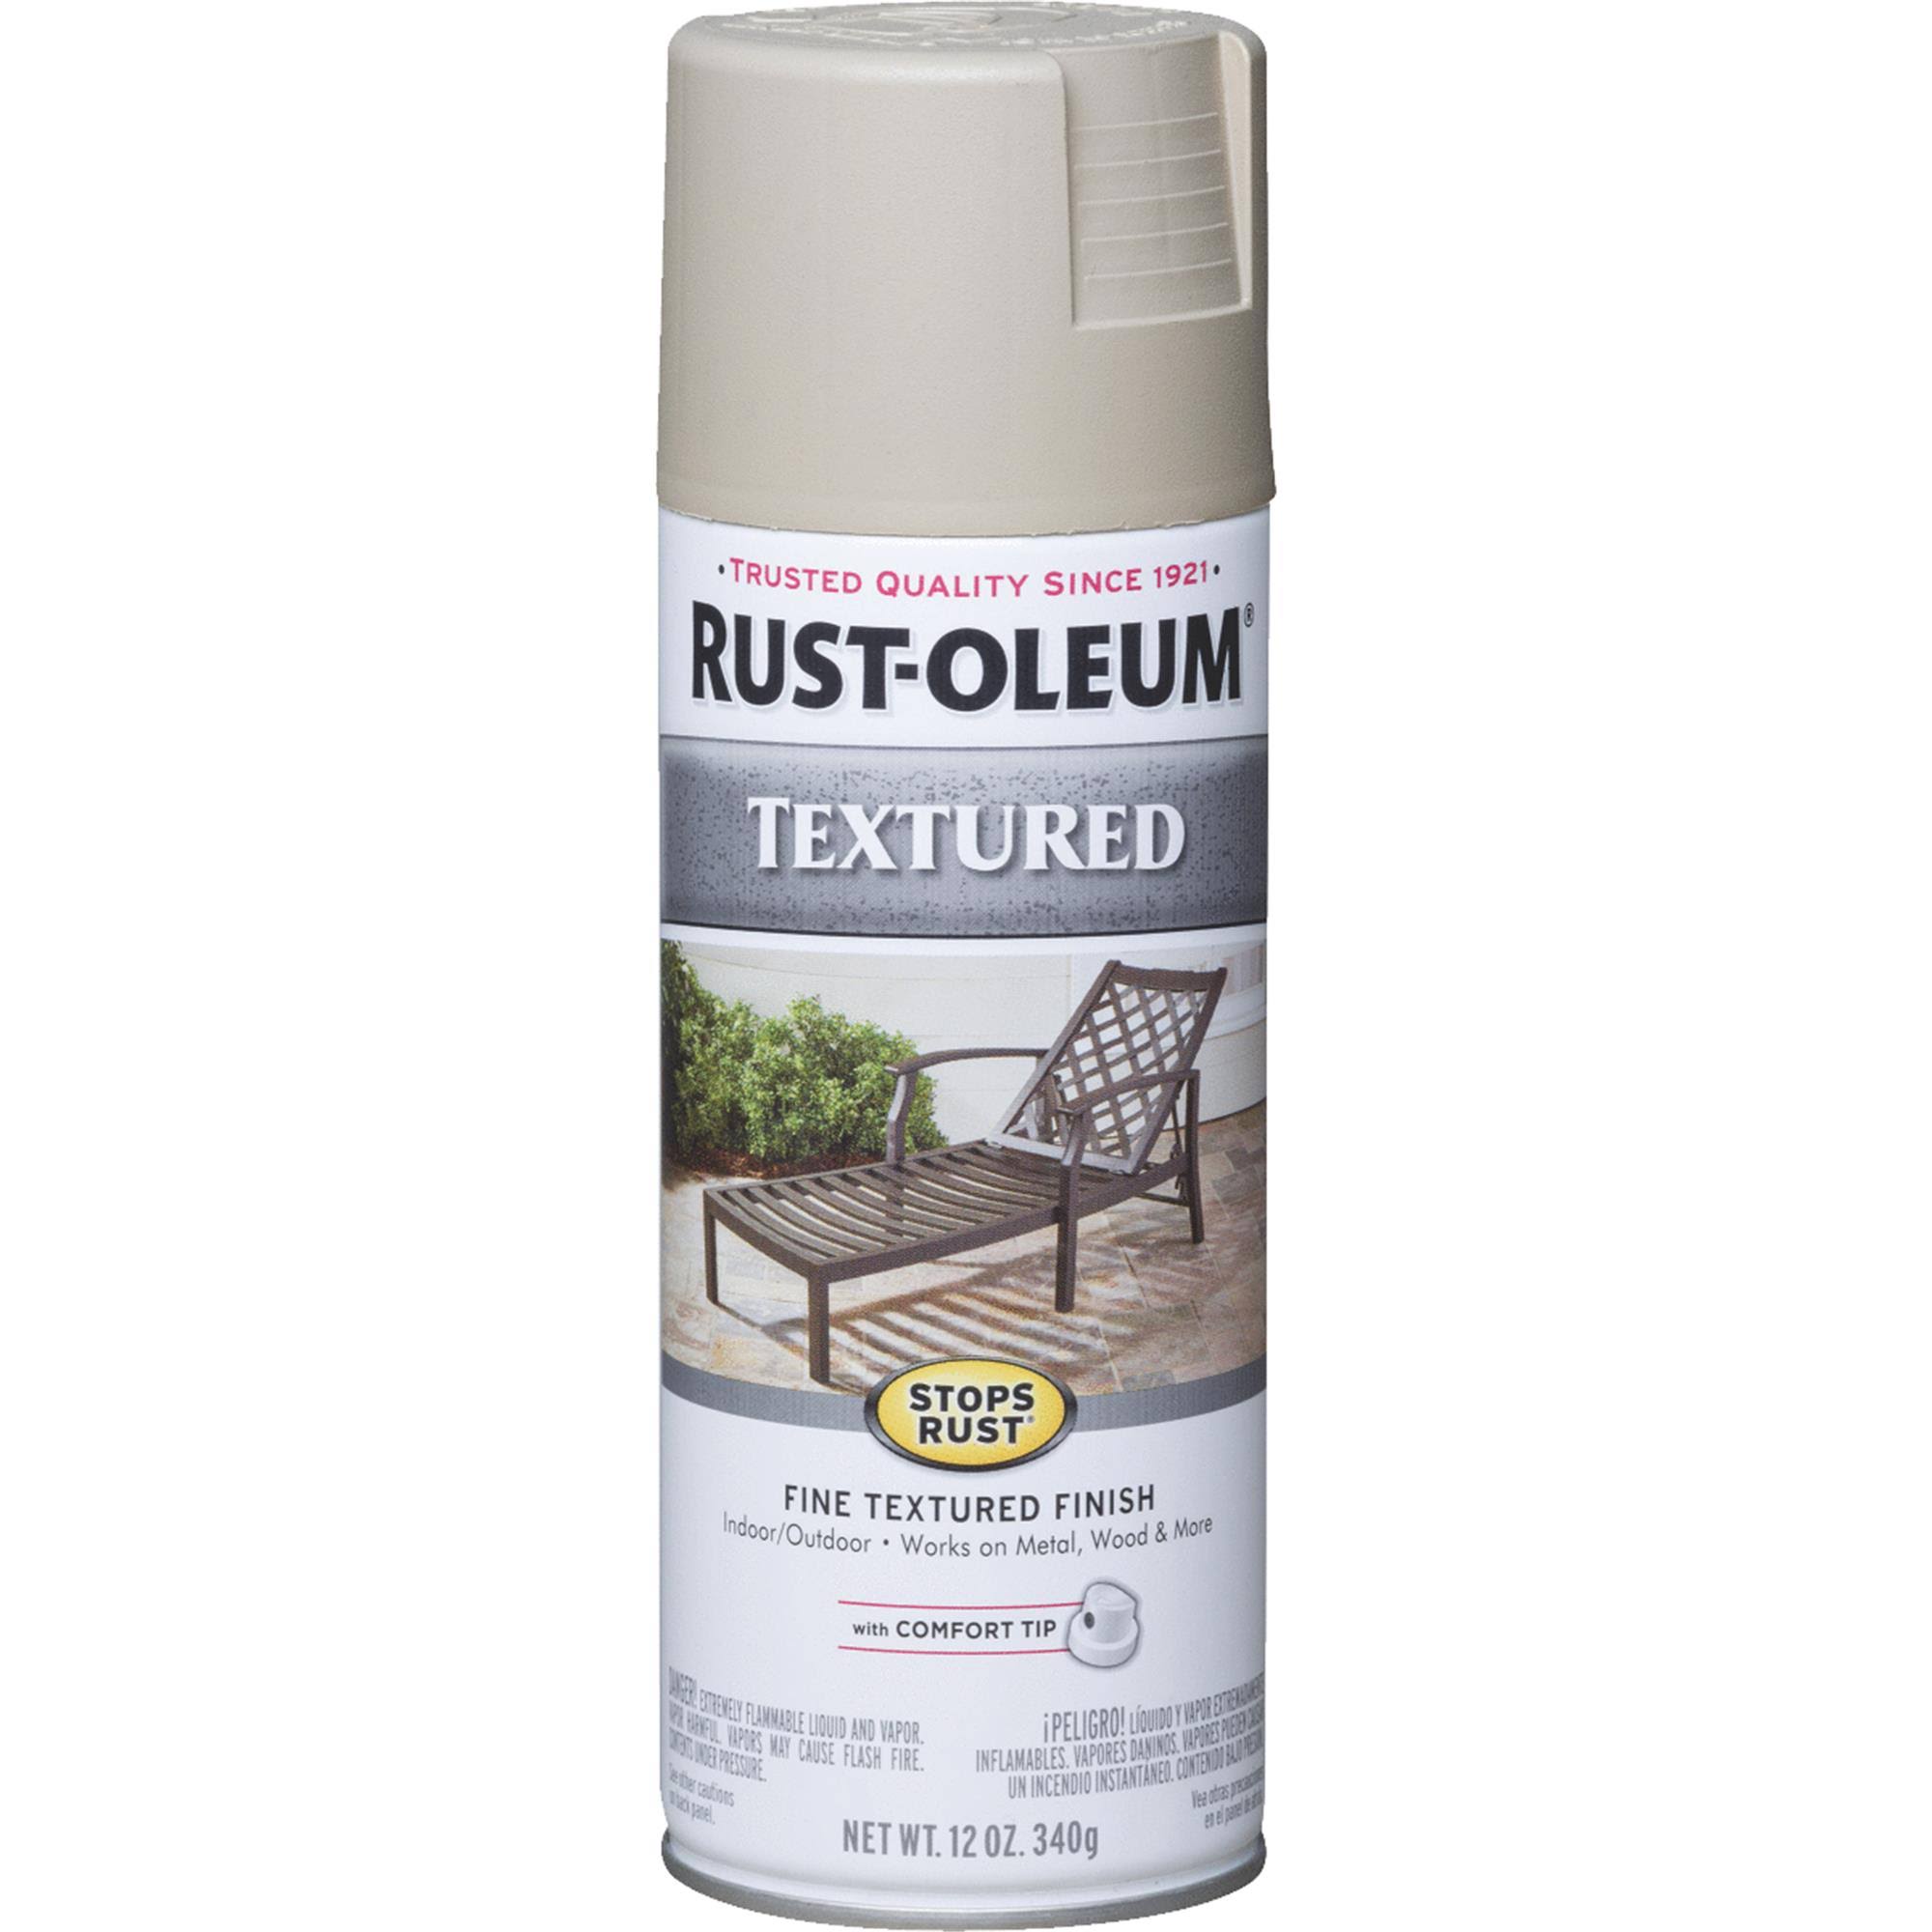 Rust-Oleum Textured Finish Spray Paint - Sandstone, 340g